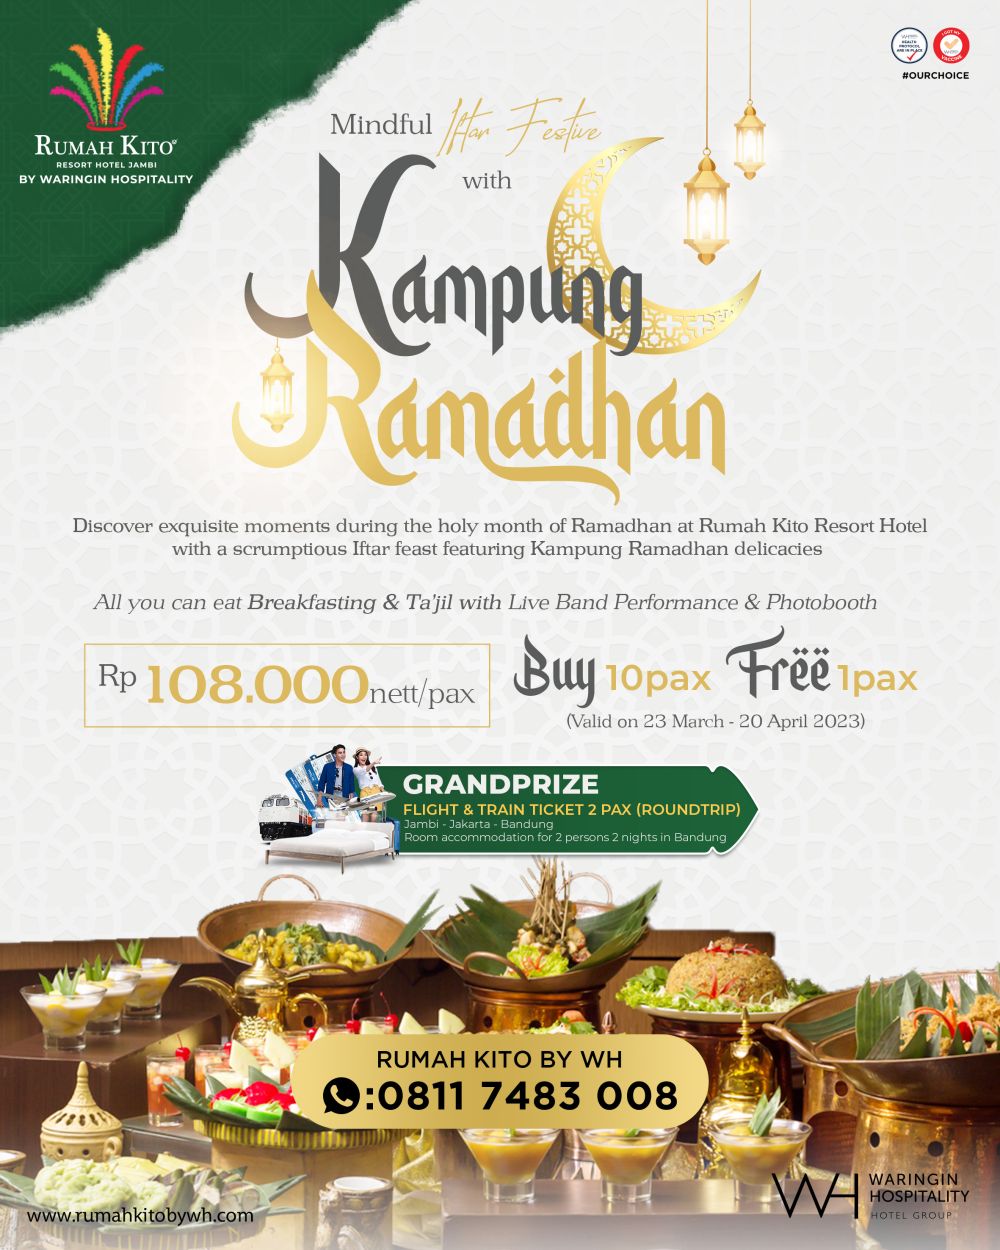 Spesial Promo 'Kampung Ramadhan' di Rumah Kito, Cek Disini Spesial Promo di Hari Ramadan